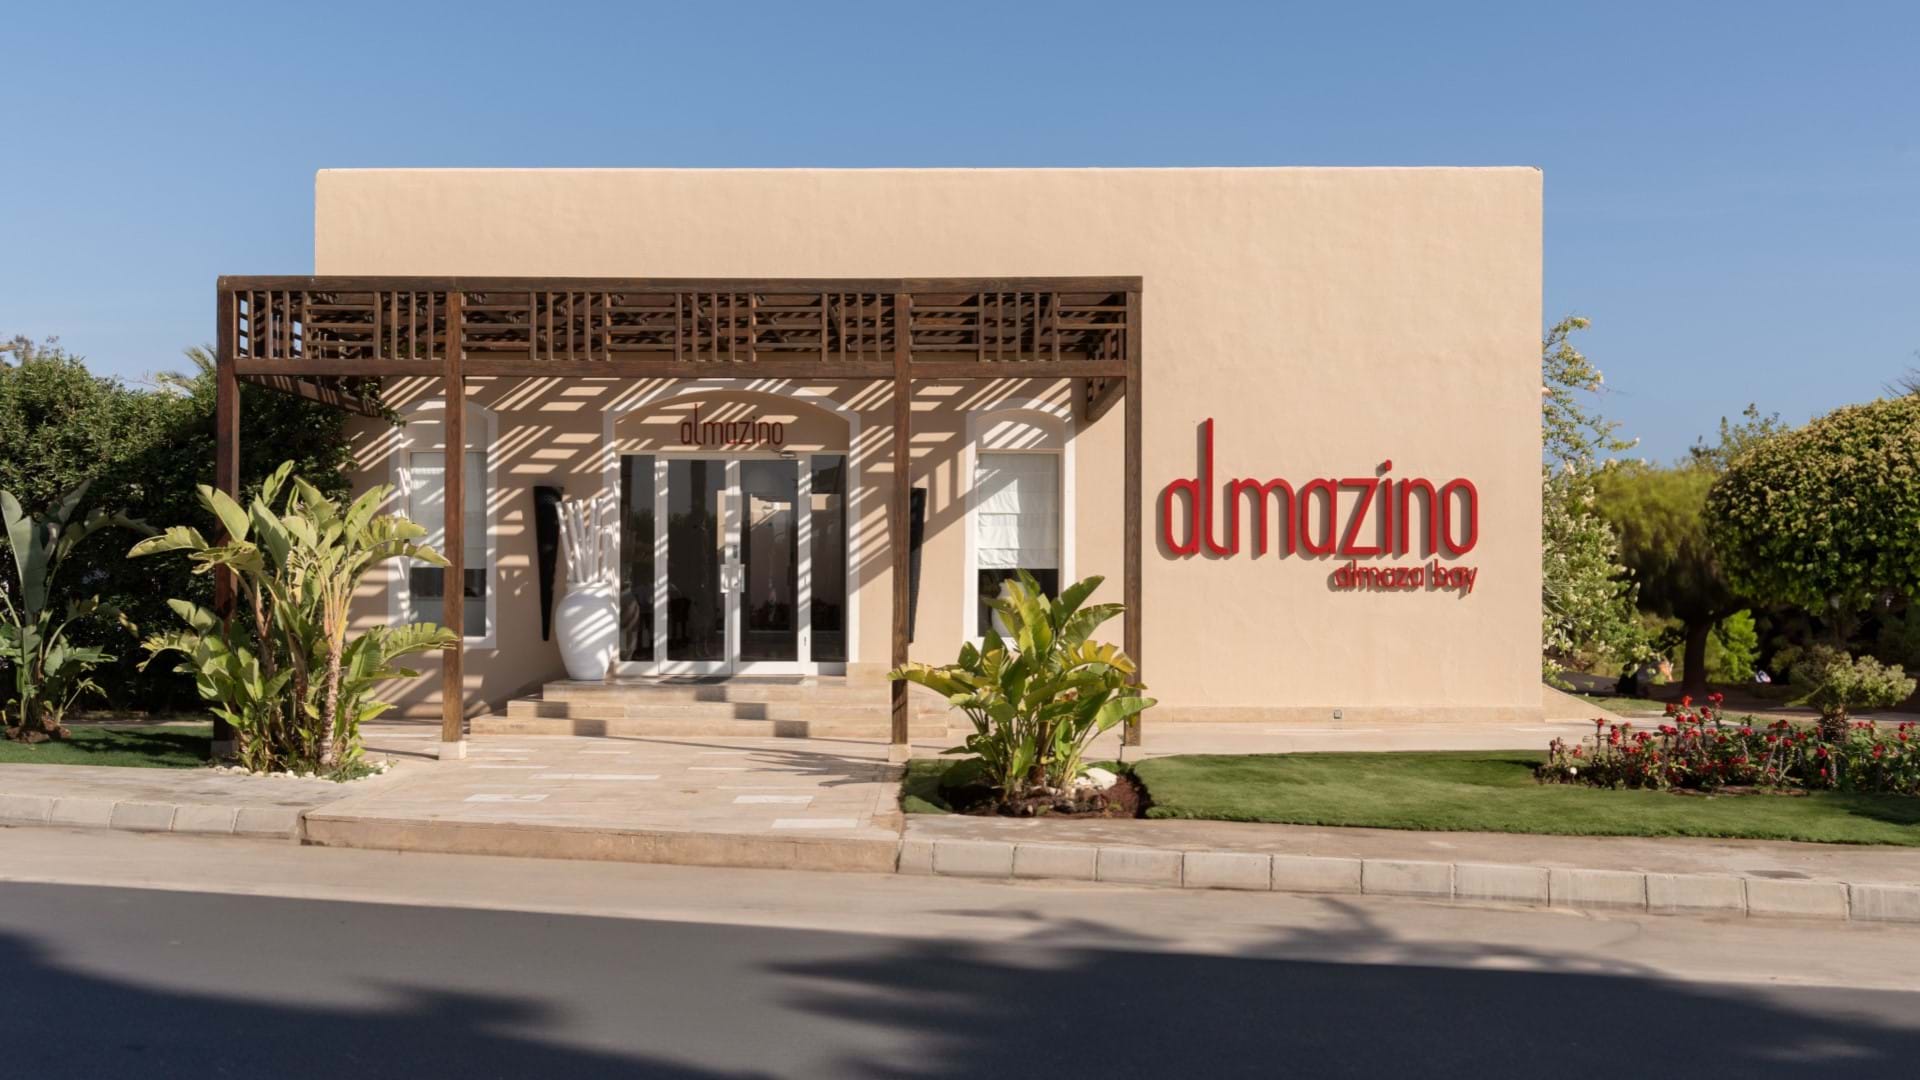 JAZ Almazino Hotel